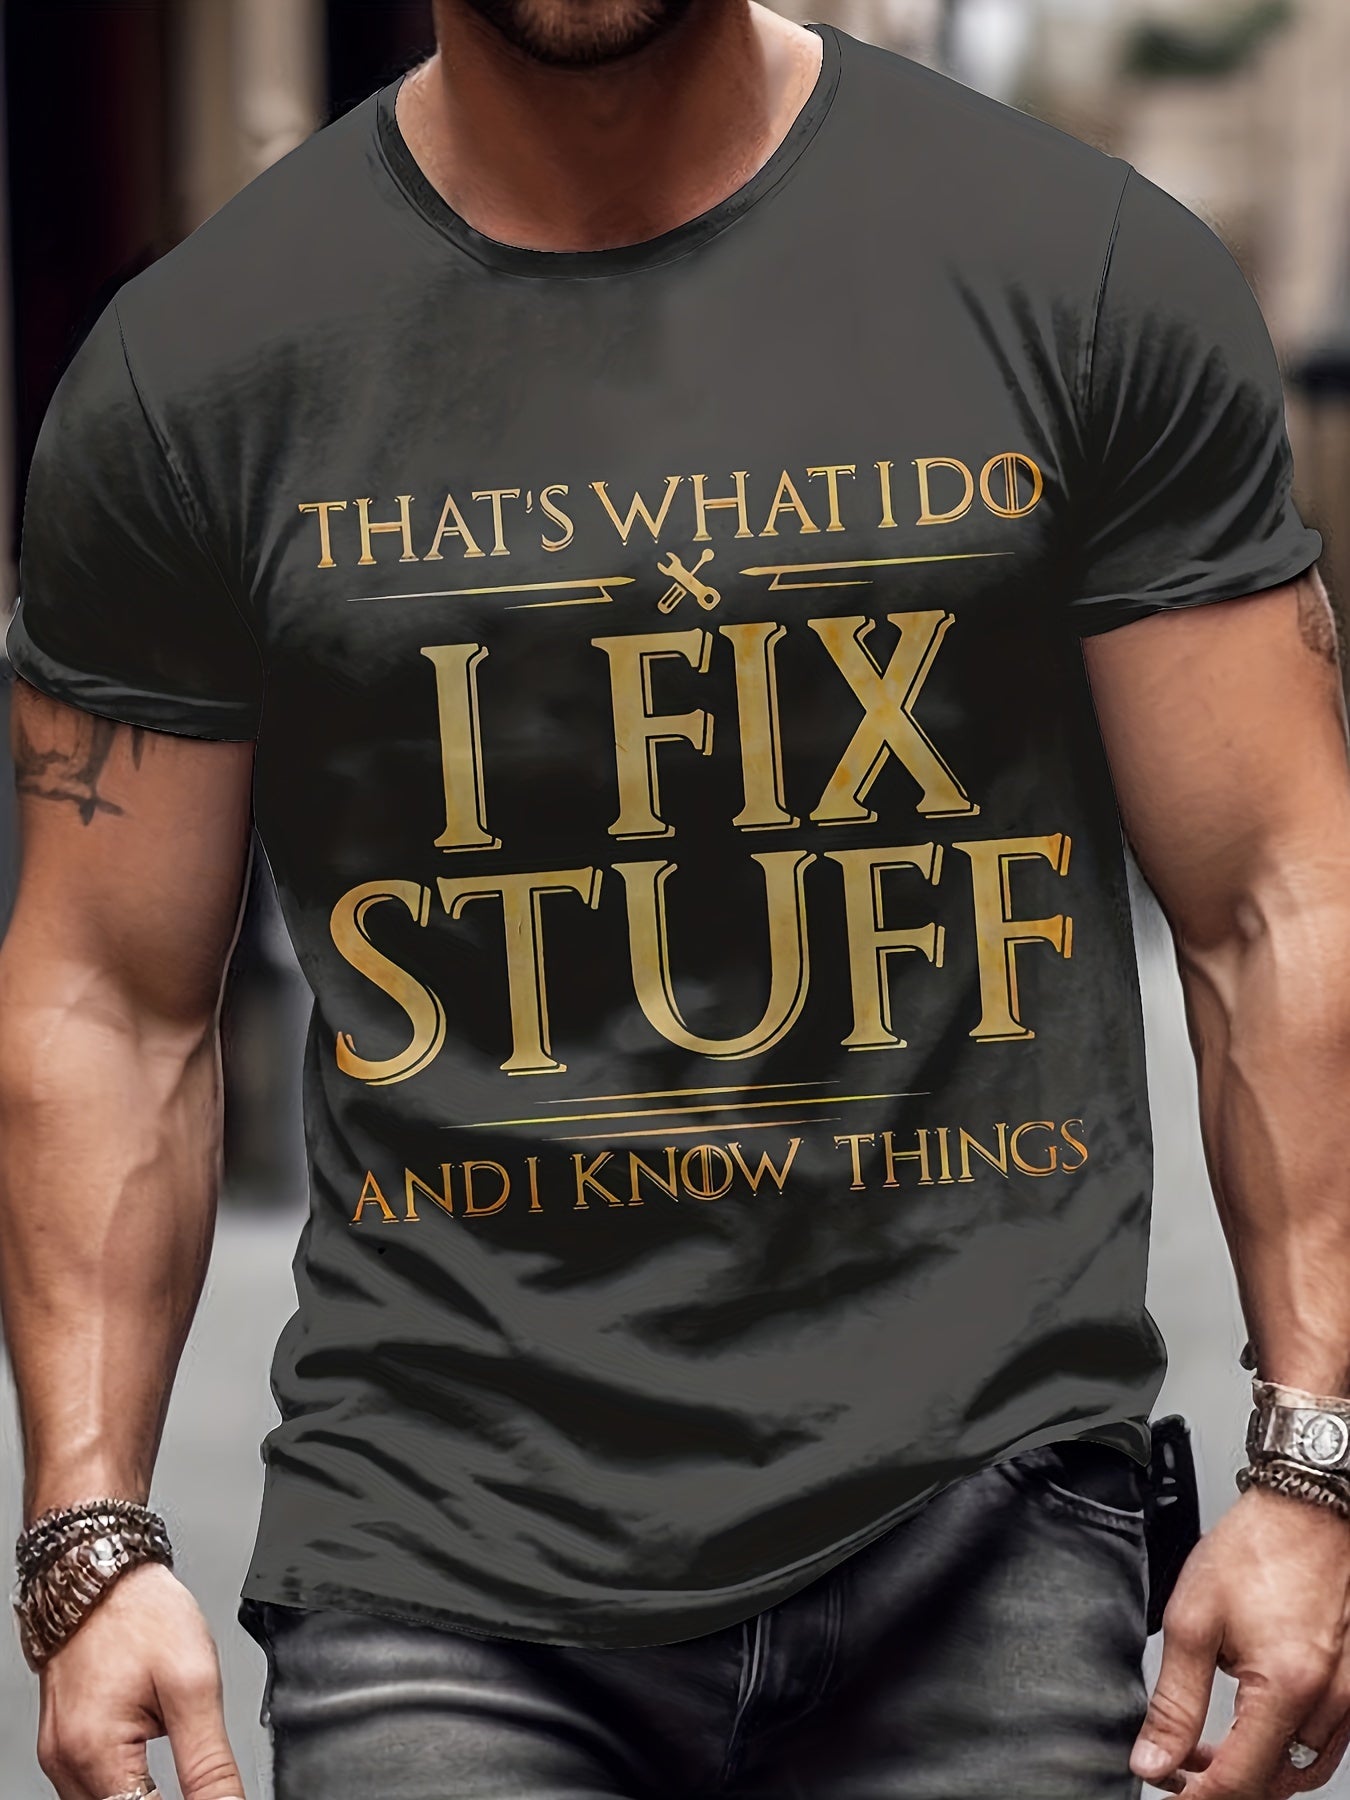 Fix Stuff Slogan 3D Digital Pattern Print Graphic Men's T-shirts, Causal Tees, Short Sleeves Comfortable Pullover Tops, Men's Summer Clothing